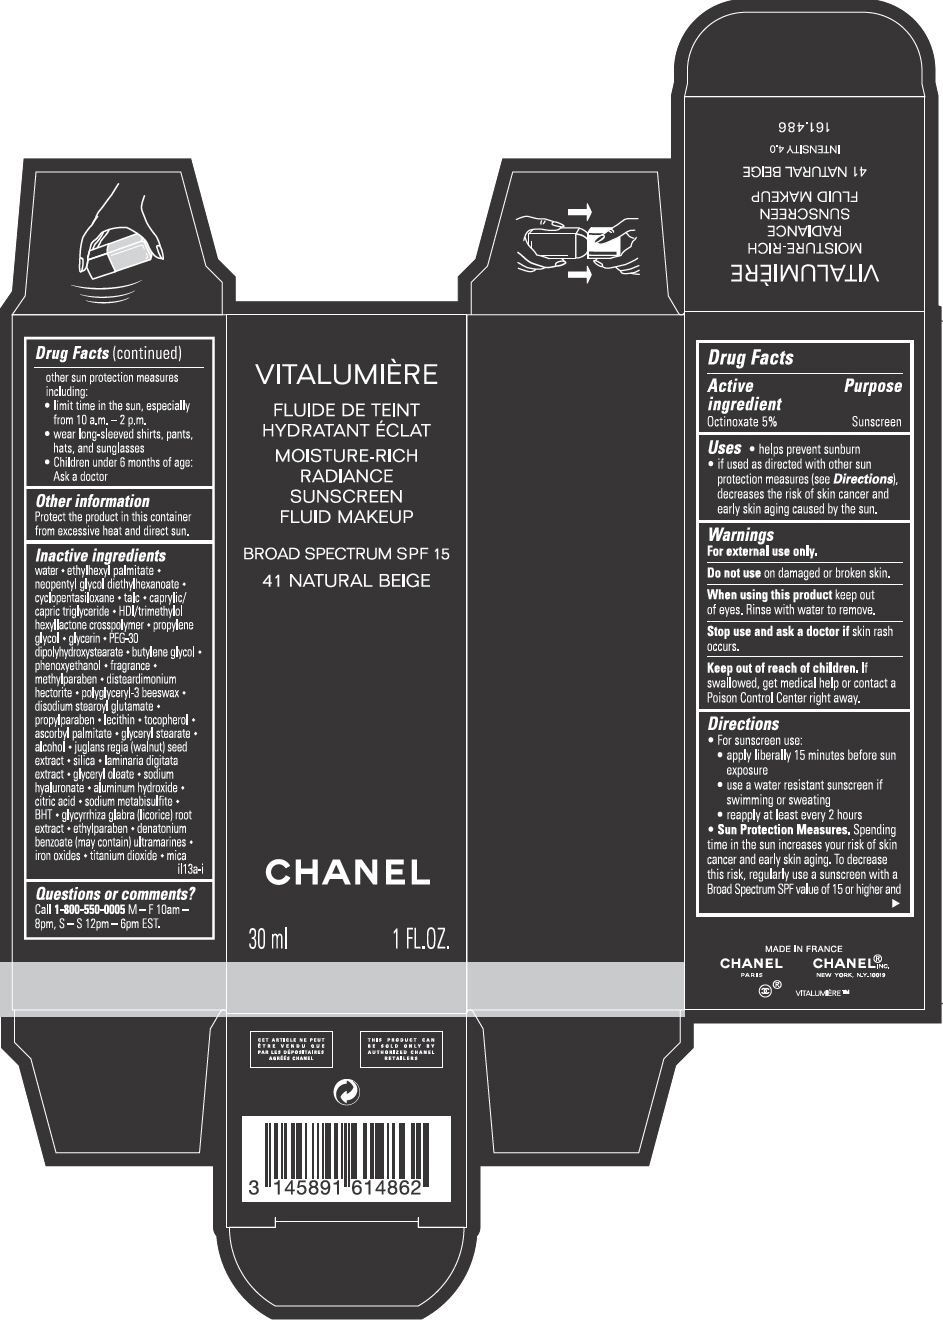 PRINCIPAL DISPLAY PANEL - 30 mL Bottle Carton - 41 Natural Beige